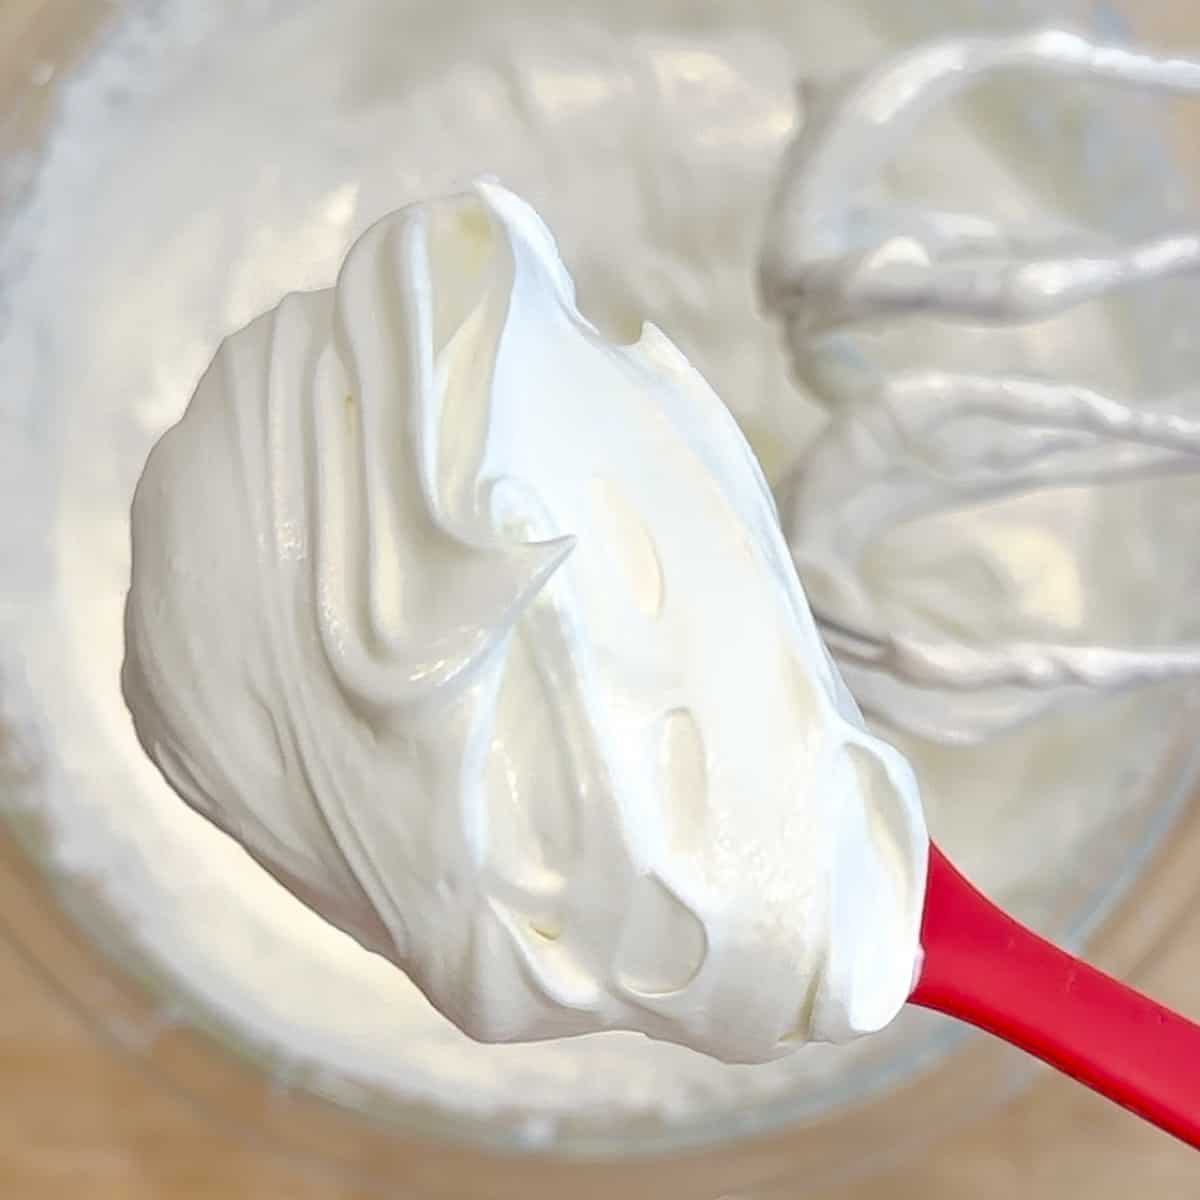 whipped greek yogurt cream on a red spatula.